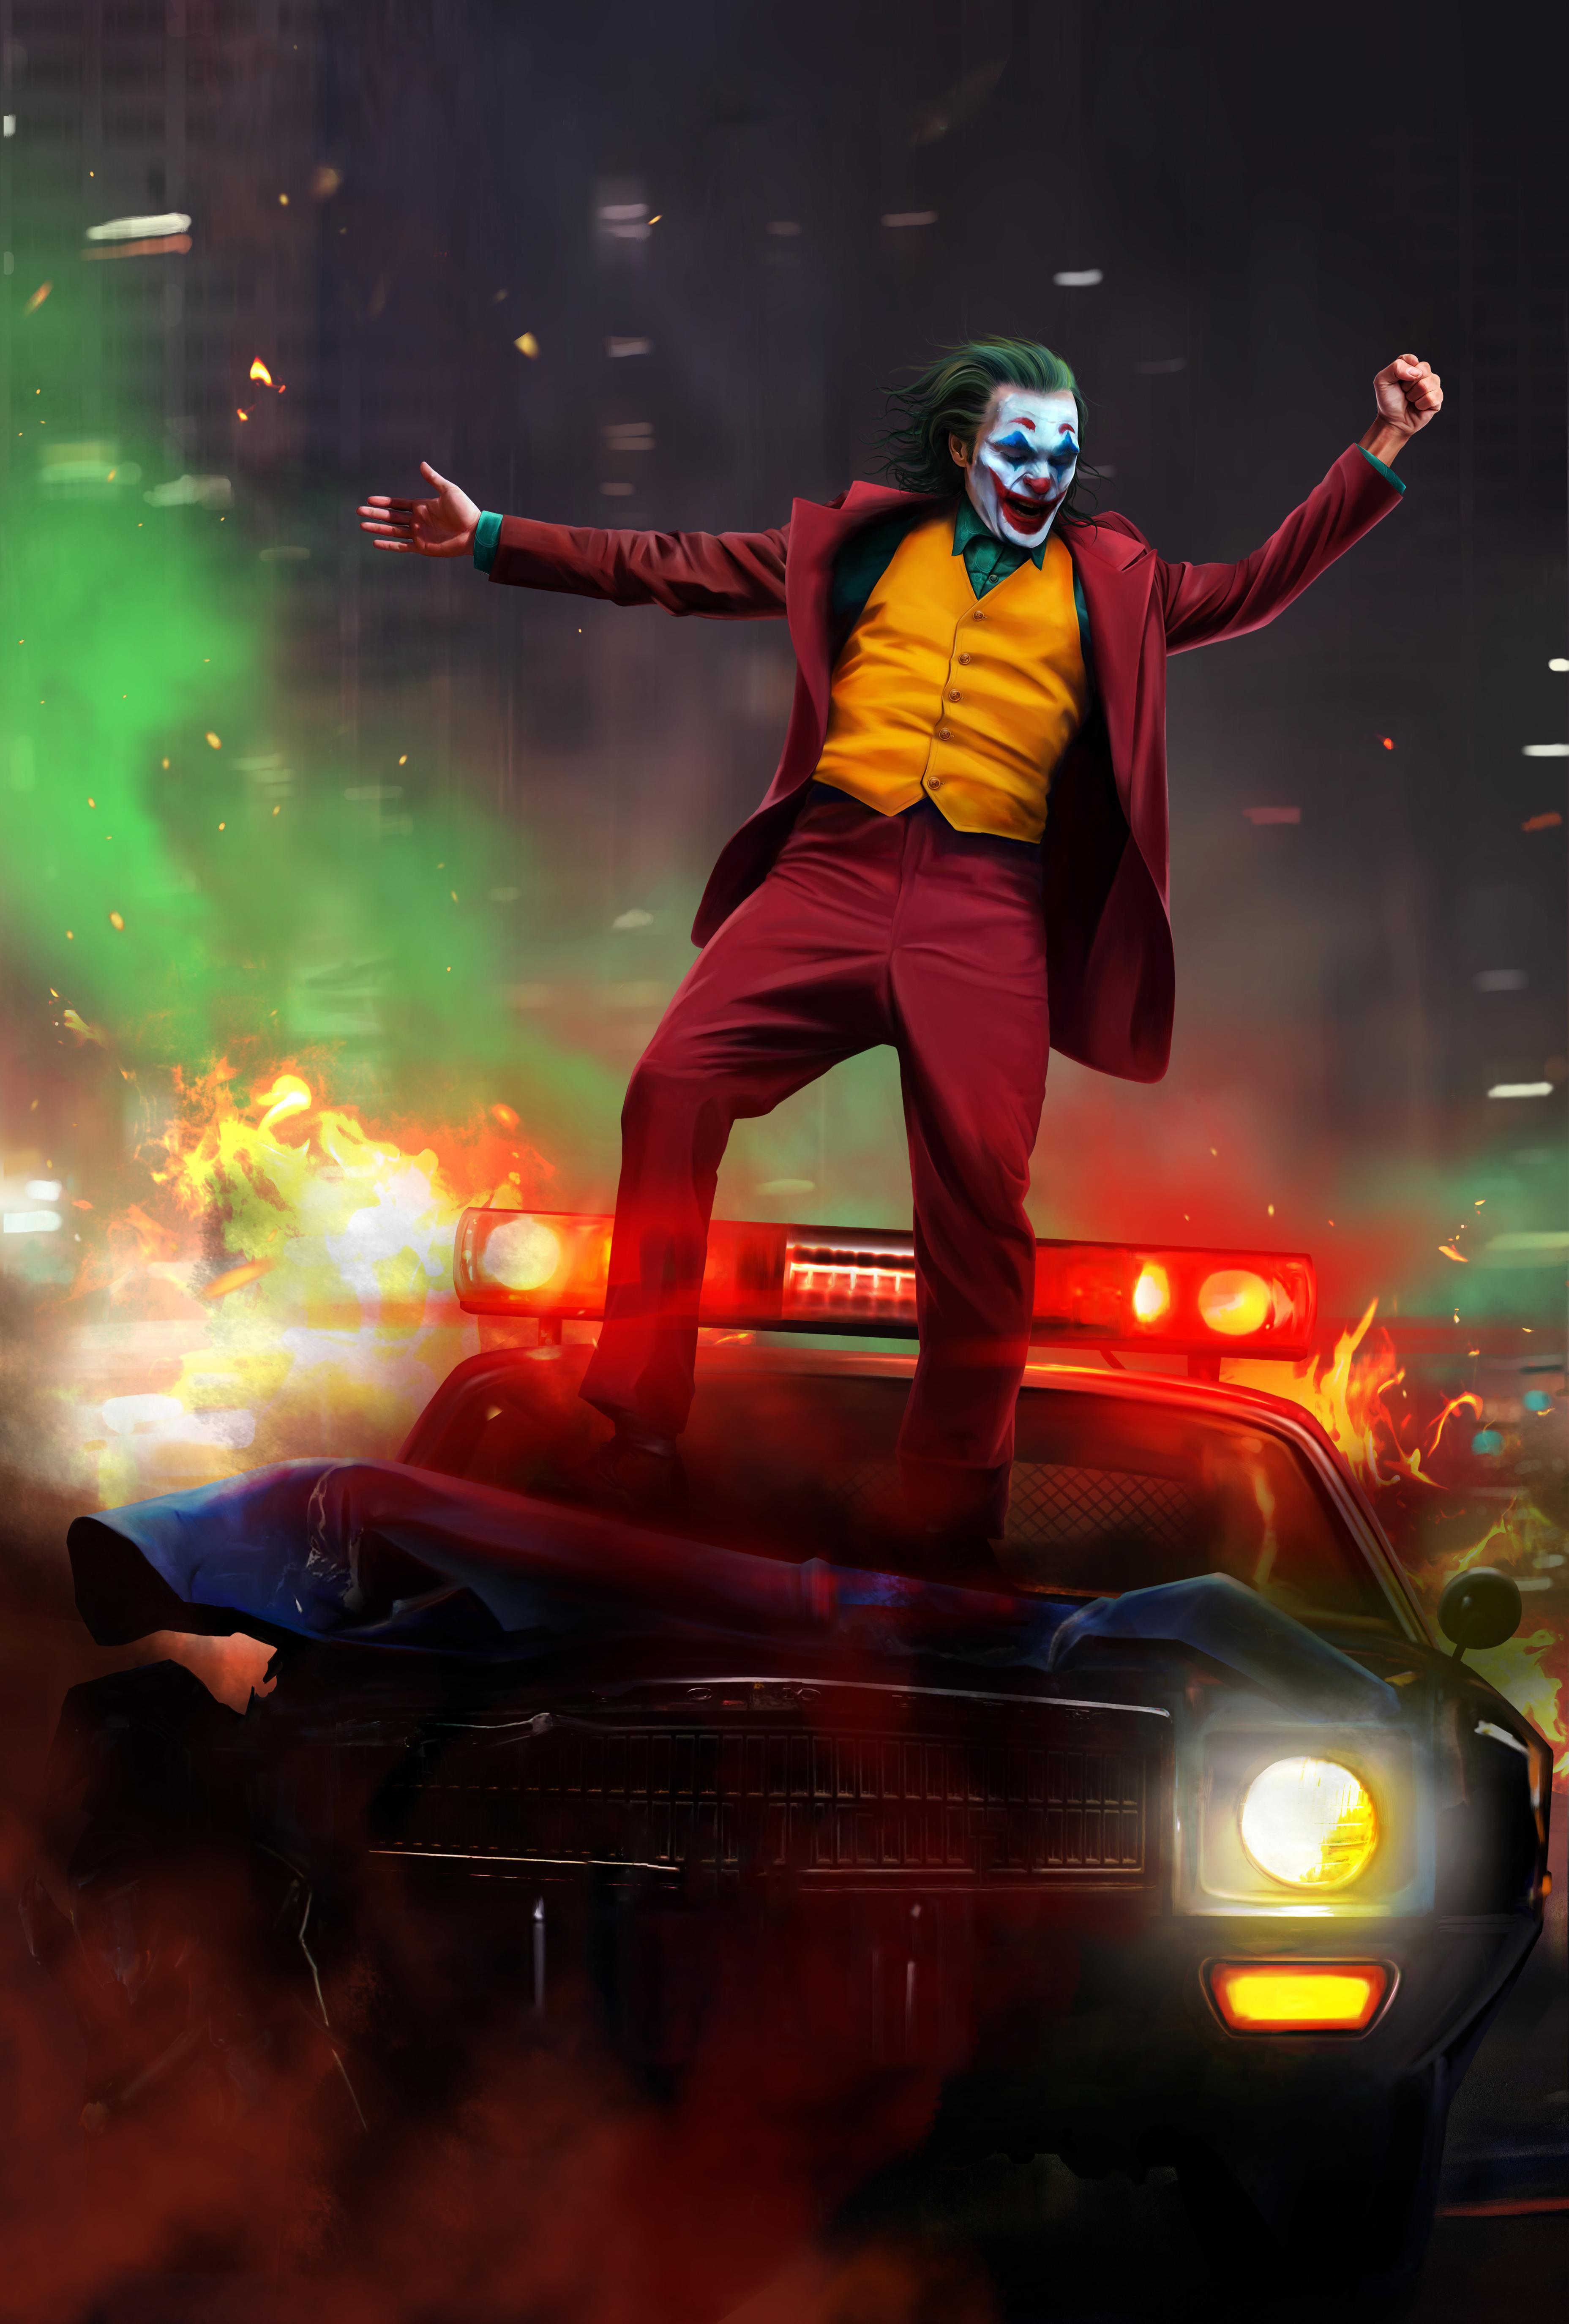 Joker 2019 Artwork Wallpaper, HD Artist 4K Wallpaper, Image